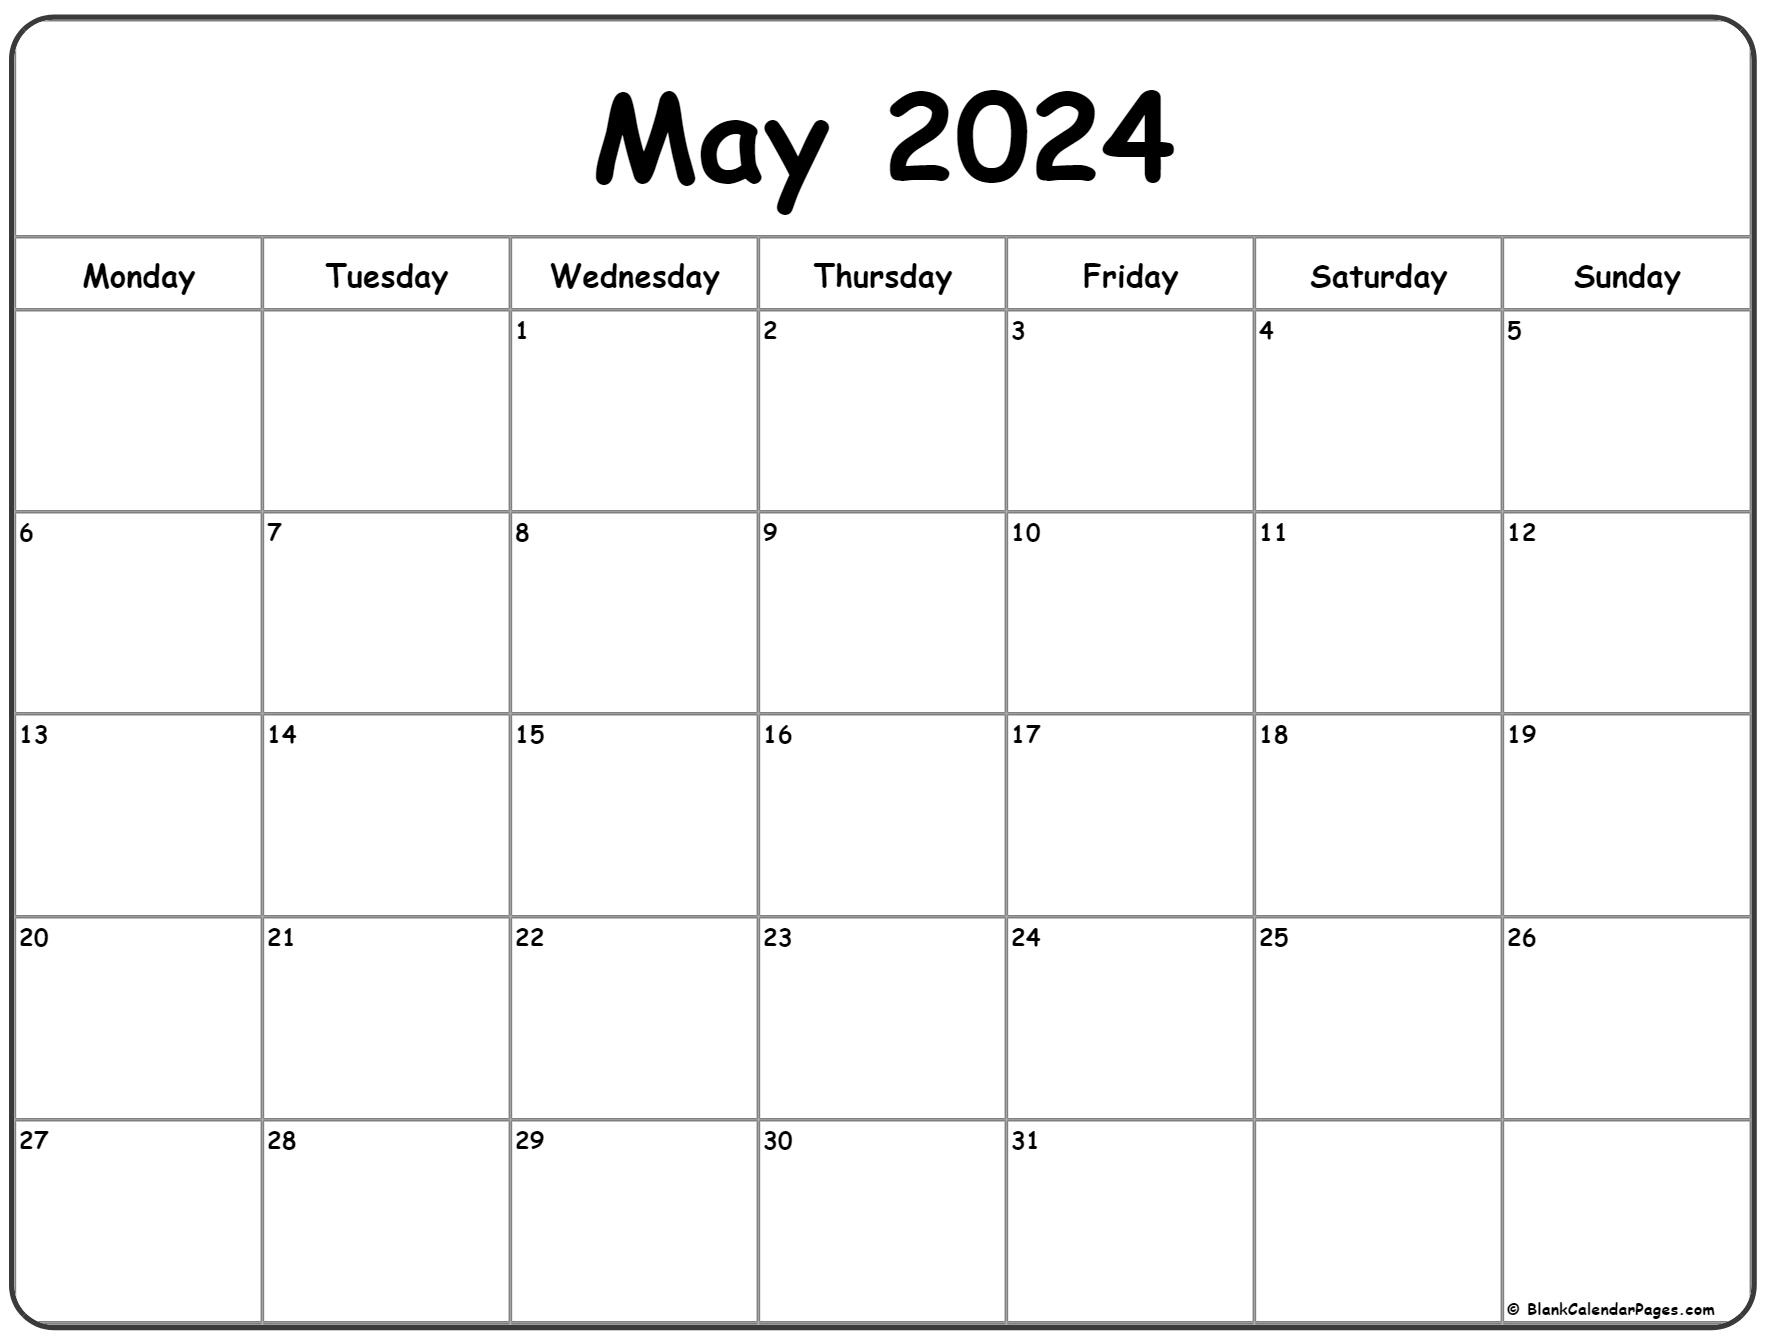 May 2024 Monday Calendar | Monday To Sunday | Printable Calendar 2024 May